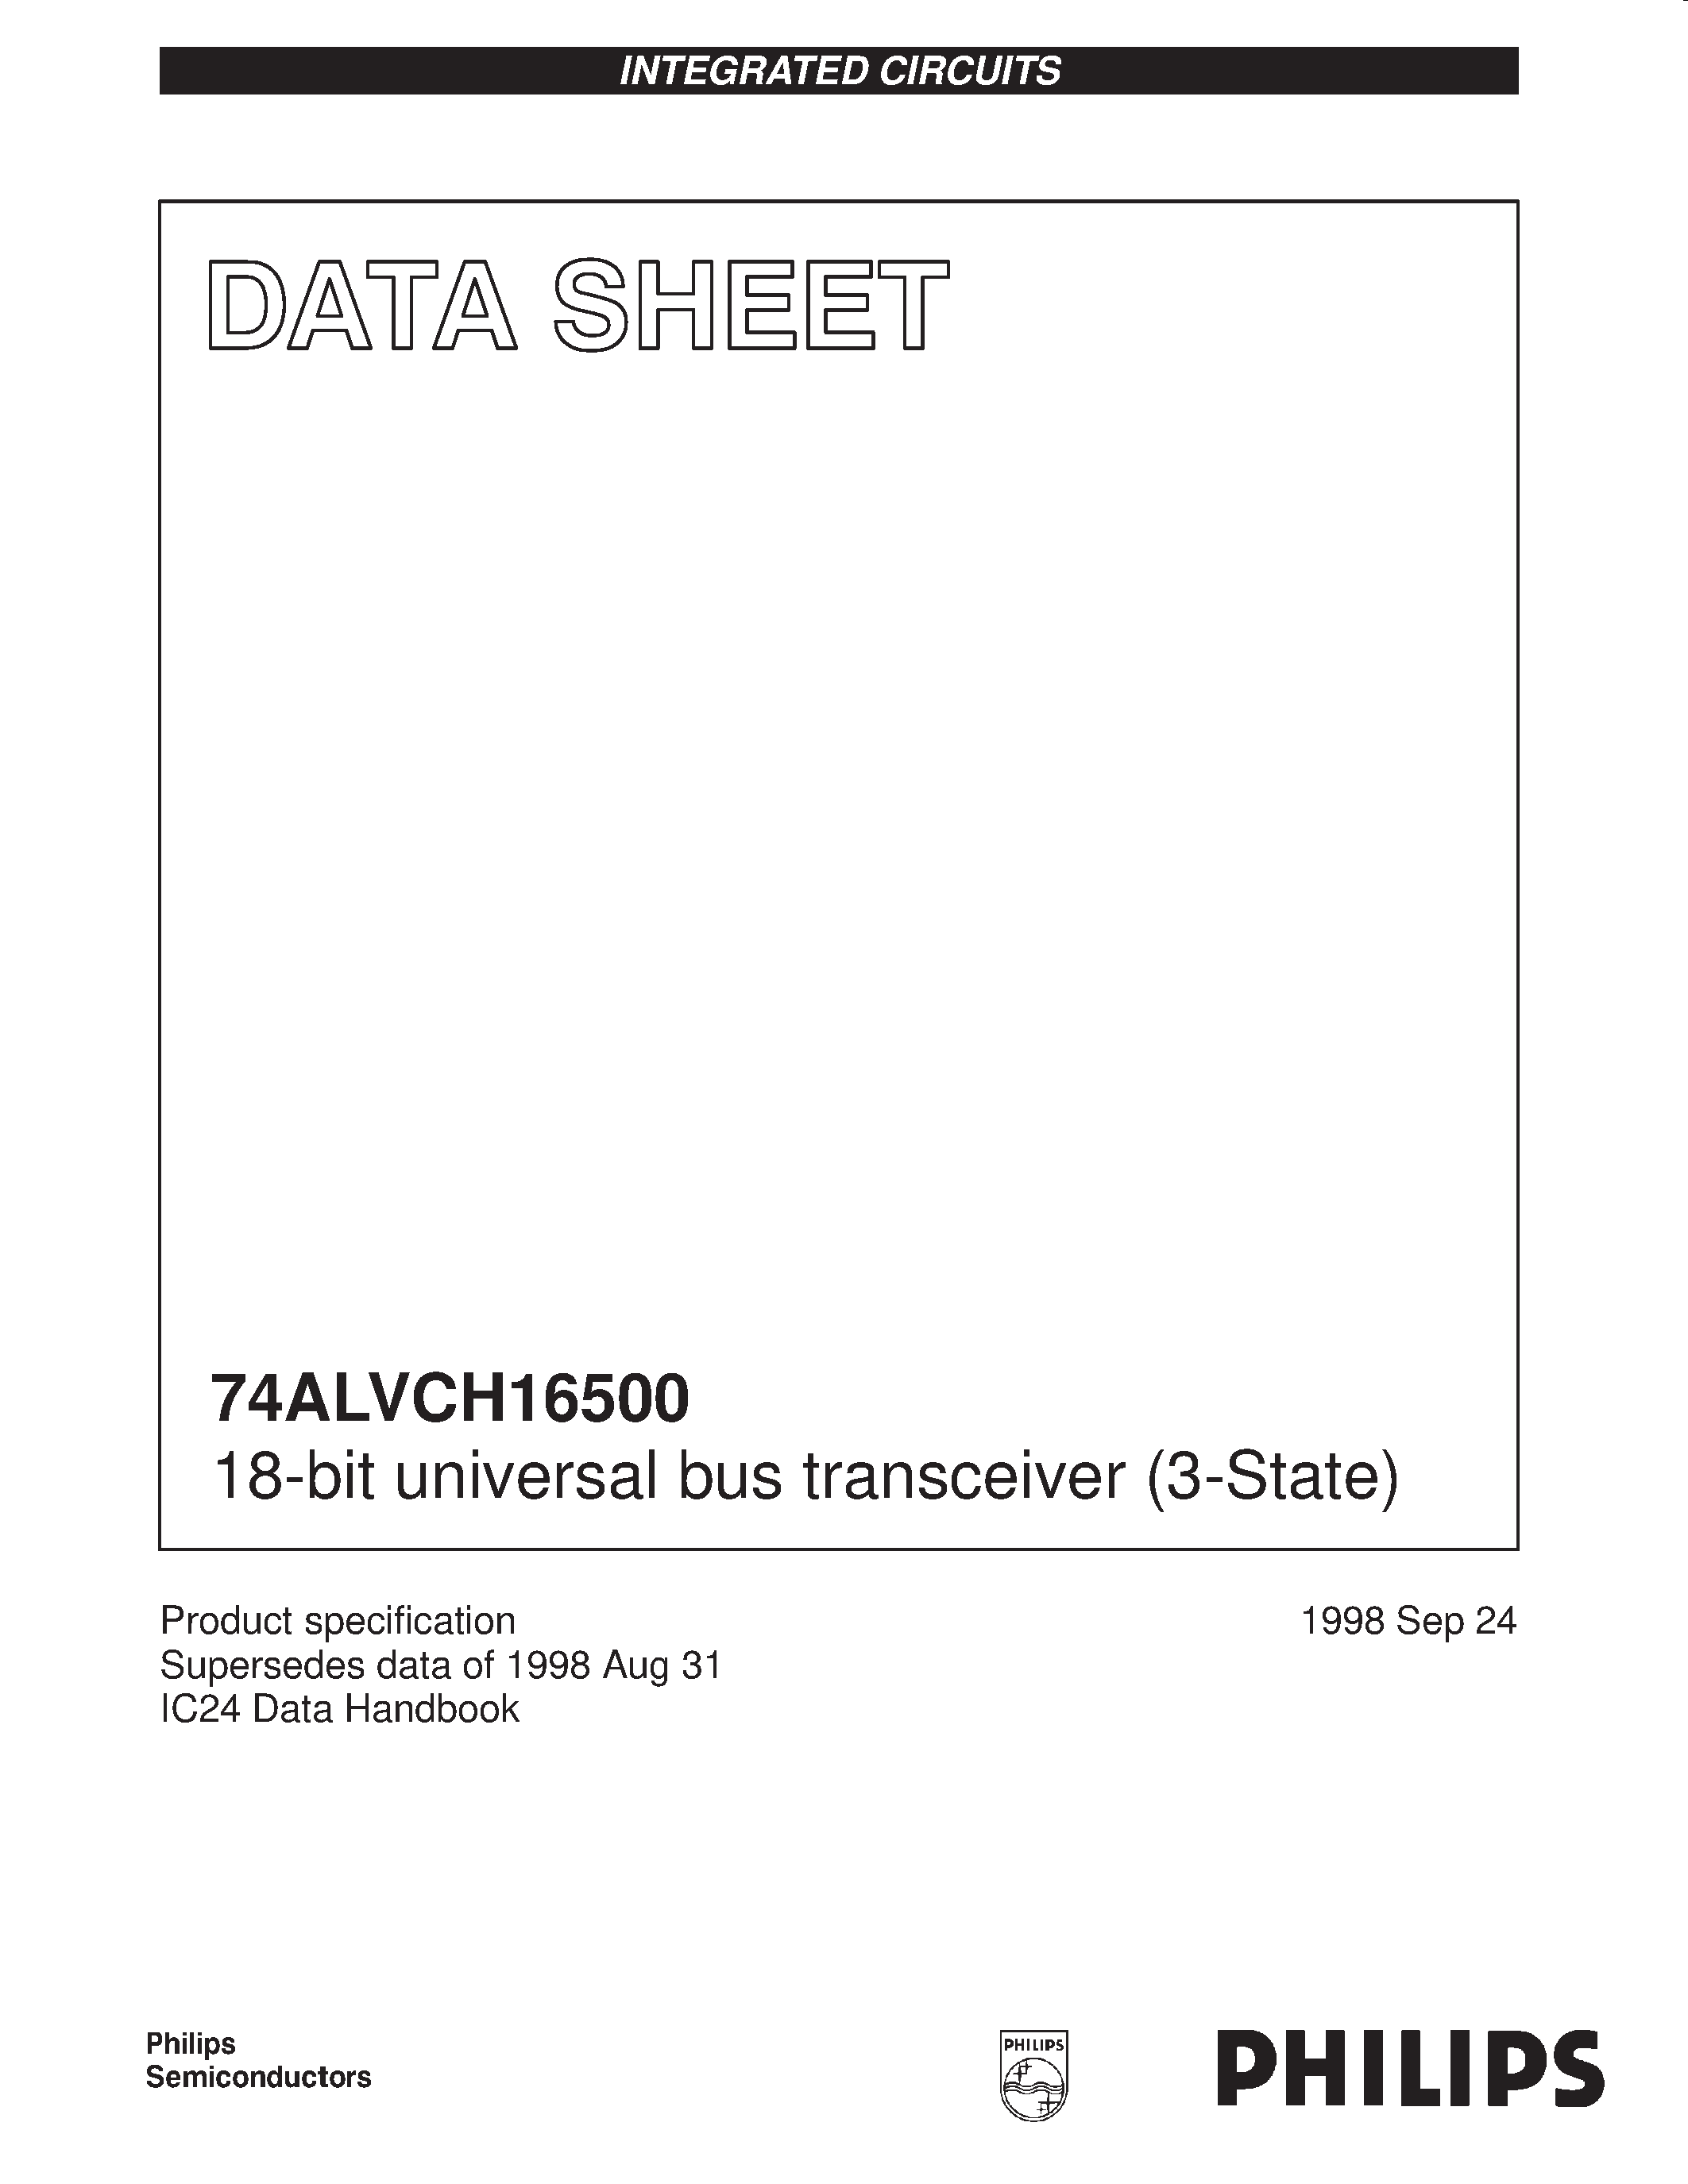 Даташит 74ALVCH16500DGG - 18-bit universal bus transceiver 3-State страница 1